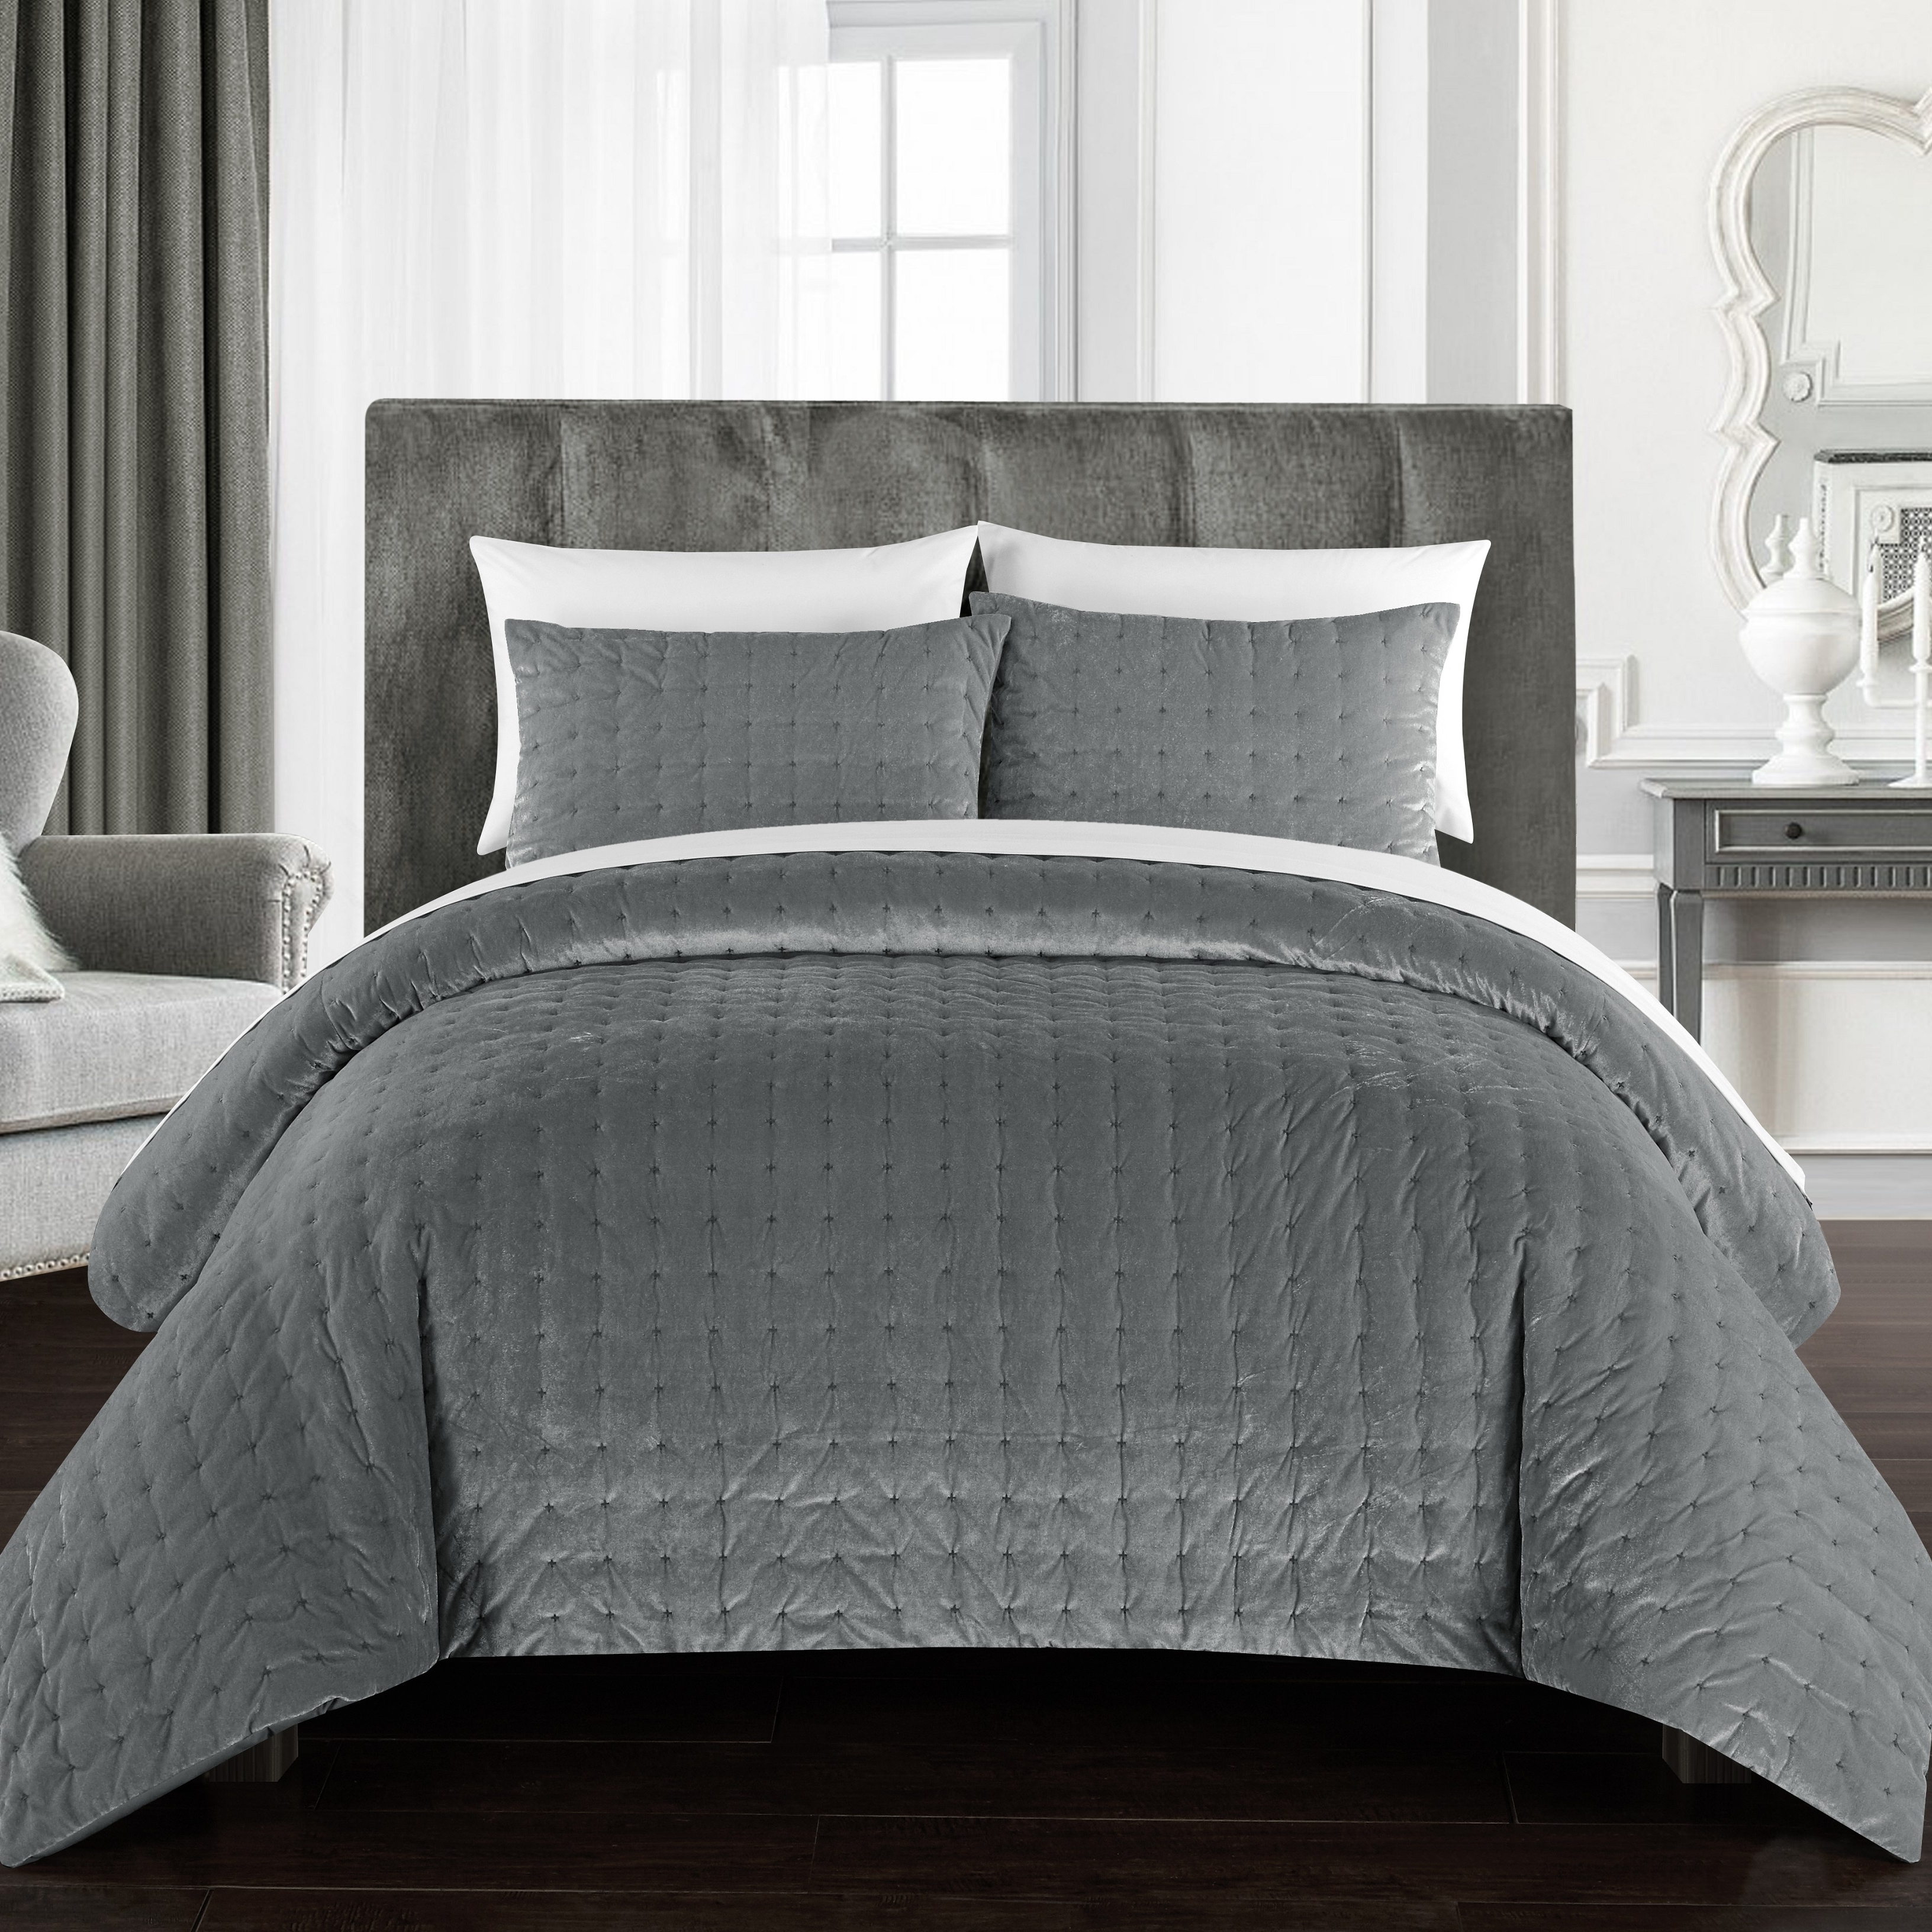 Chyna 3 Piece Comforter Set Luxurious Velvet Bedding - Grey, Queen